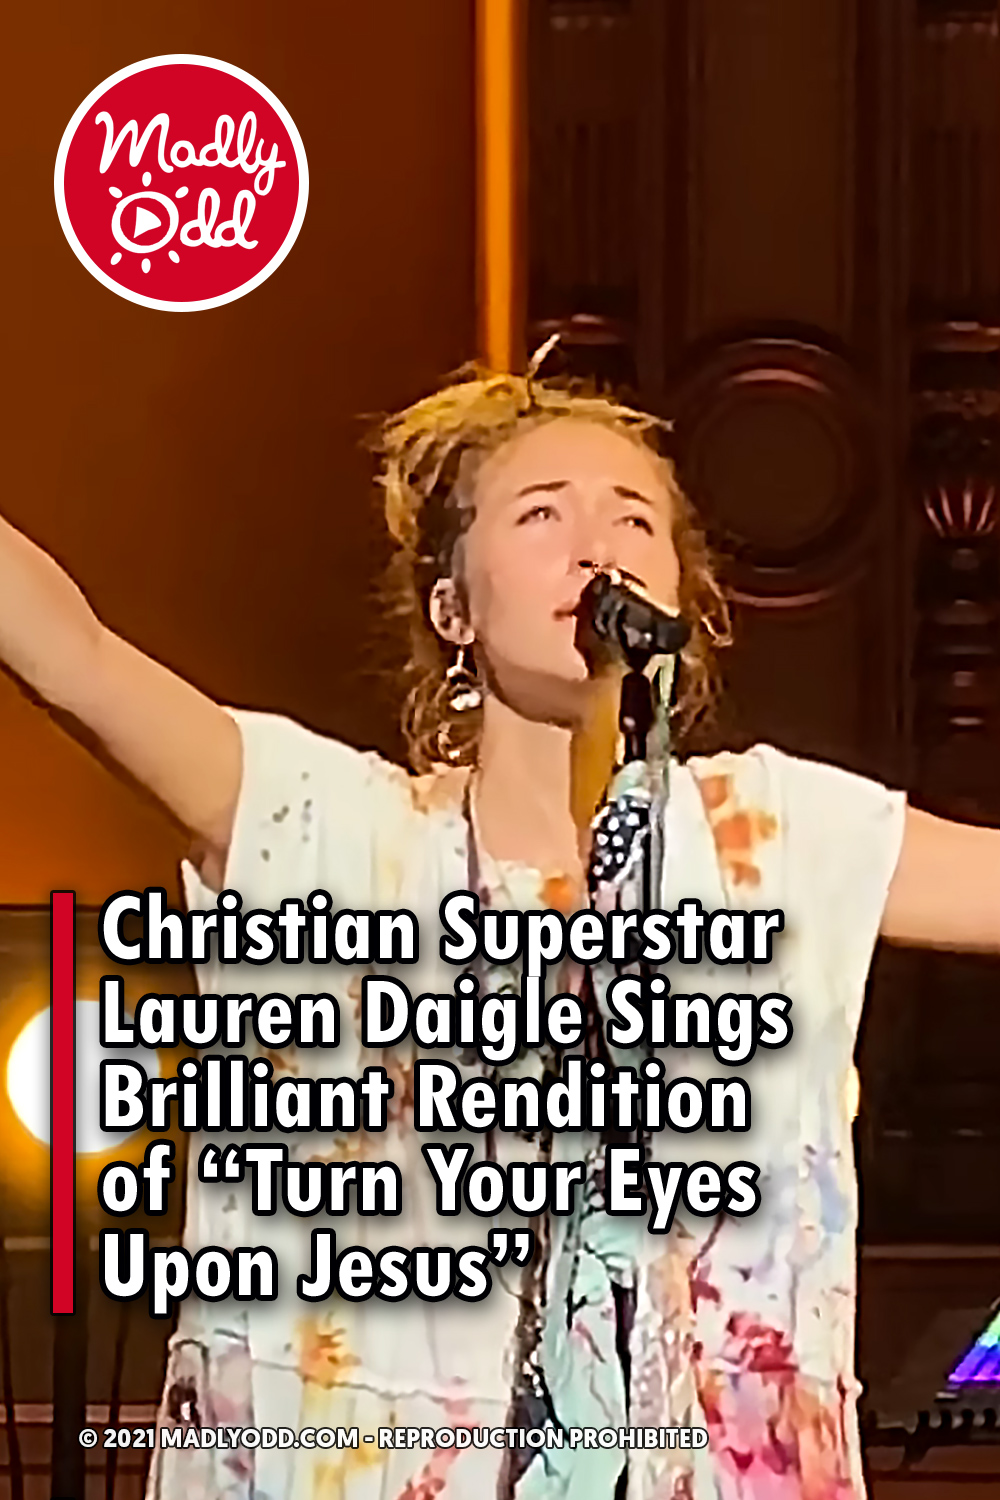 Christian Superstar Lauren Daigle Sings Brilliant Rendition of “Turn Your Eyes Upon Jesus”